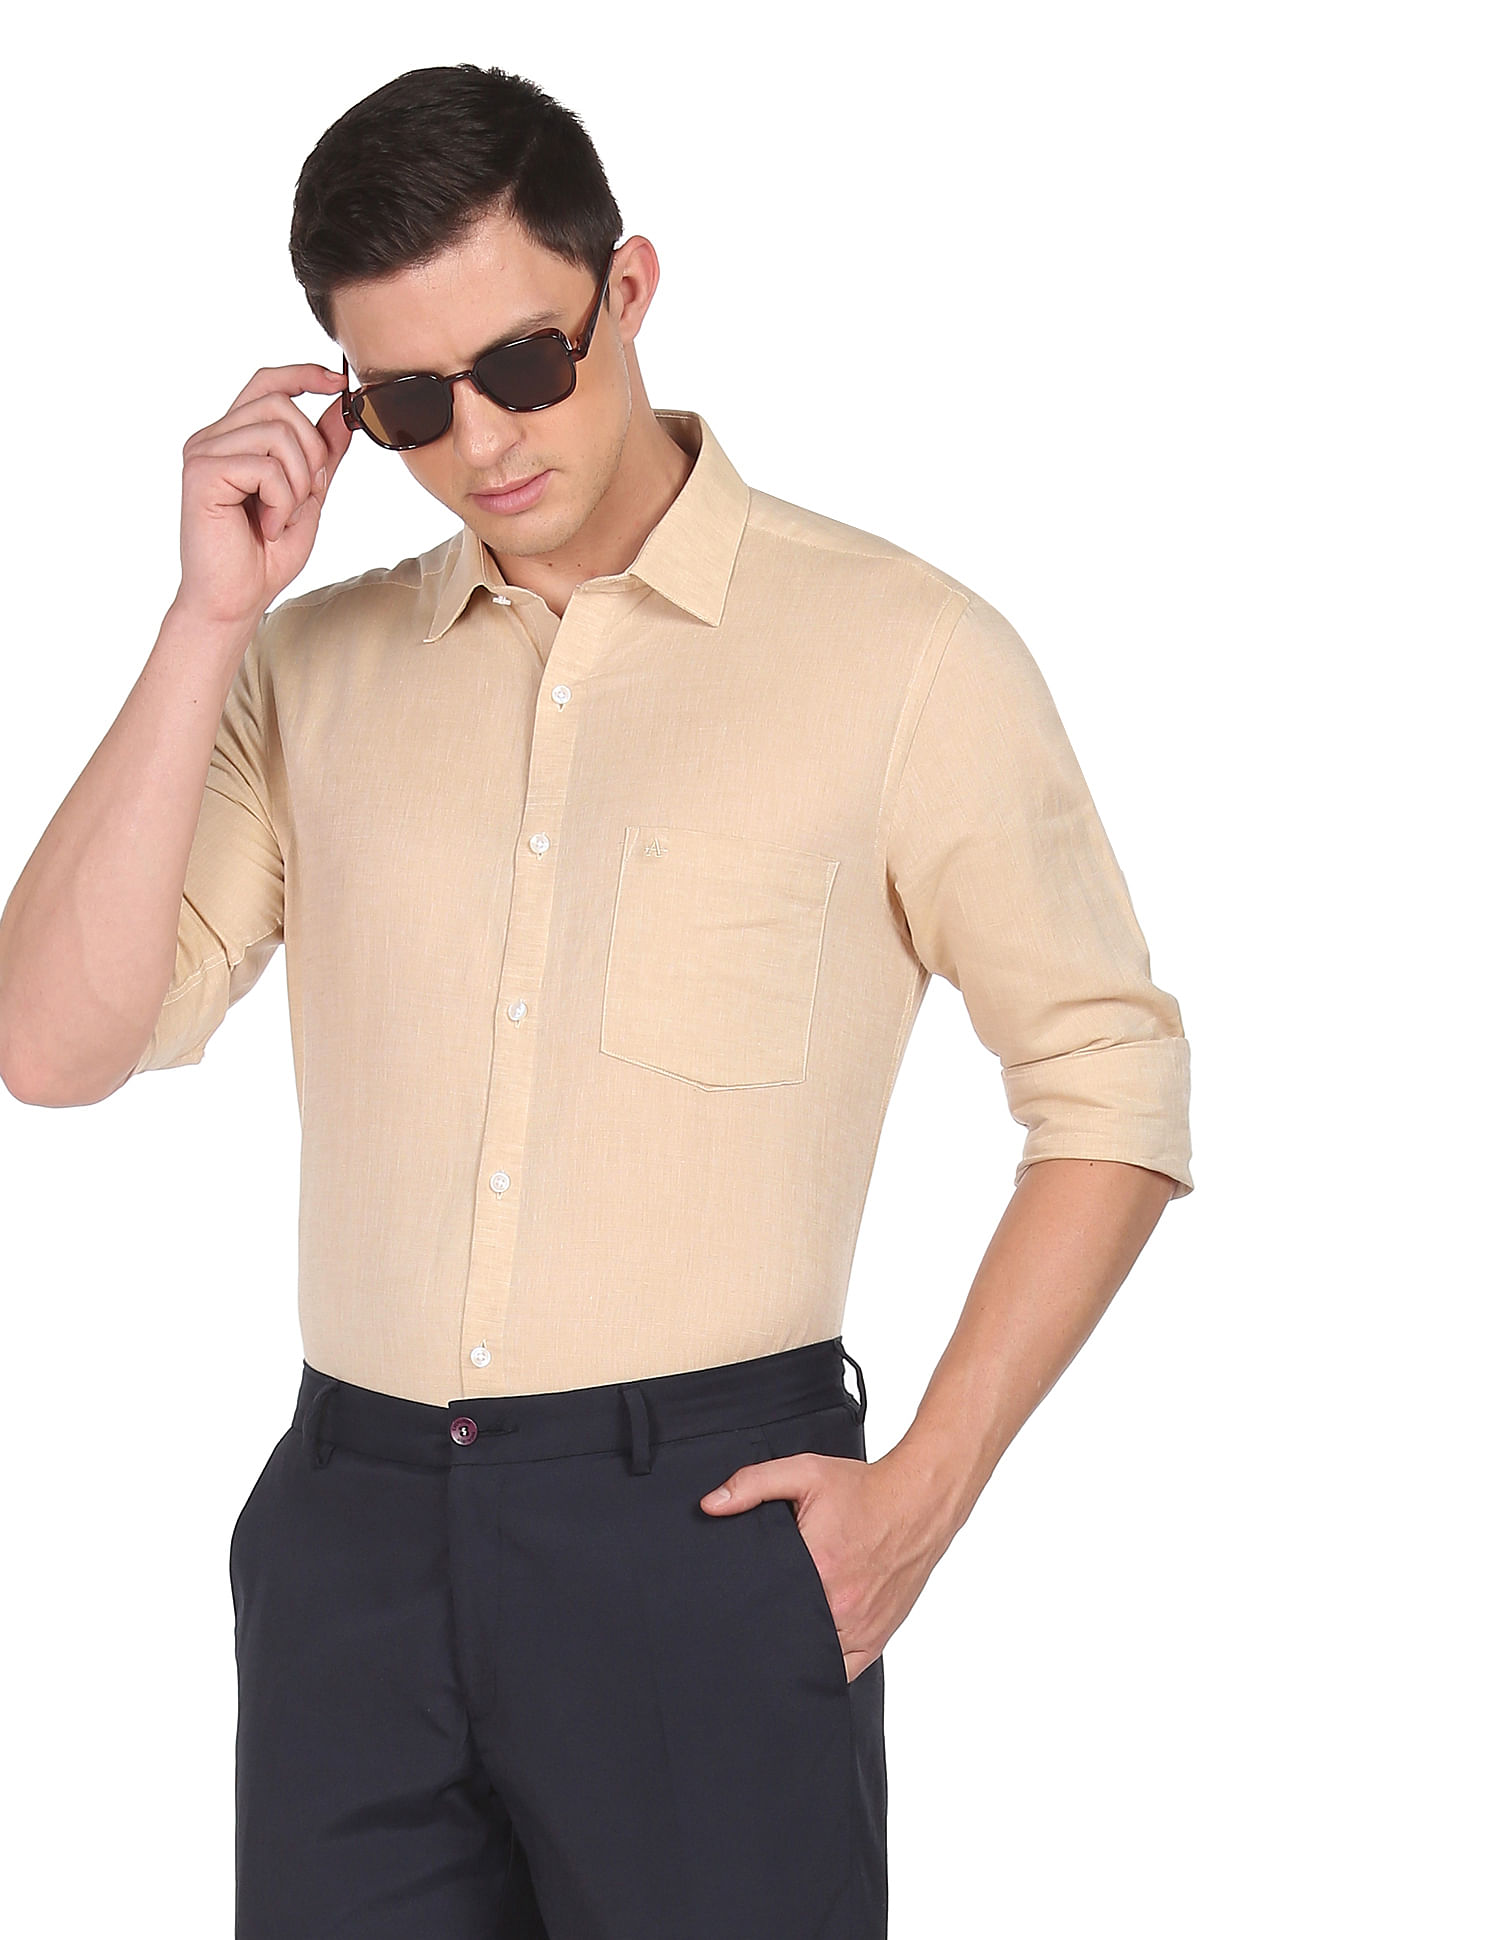 Buy The Classic Beige Shirt For Men's Online